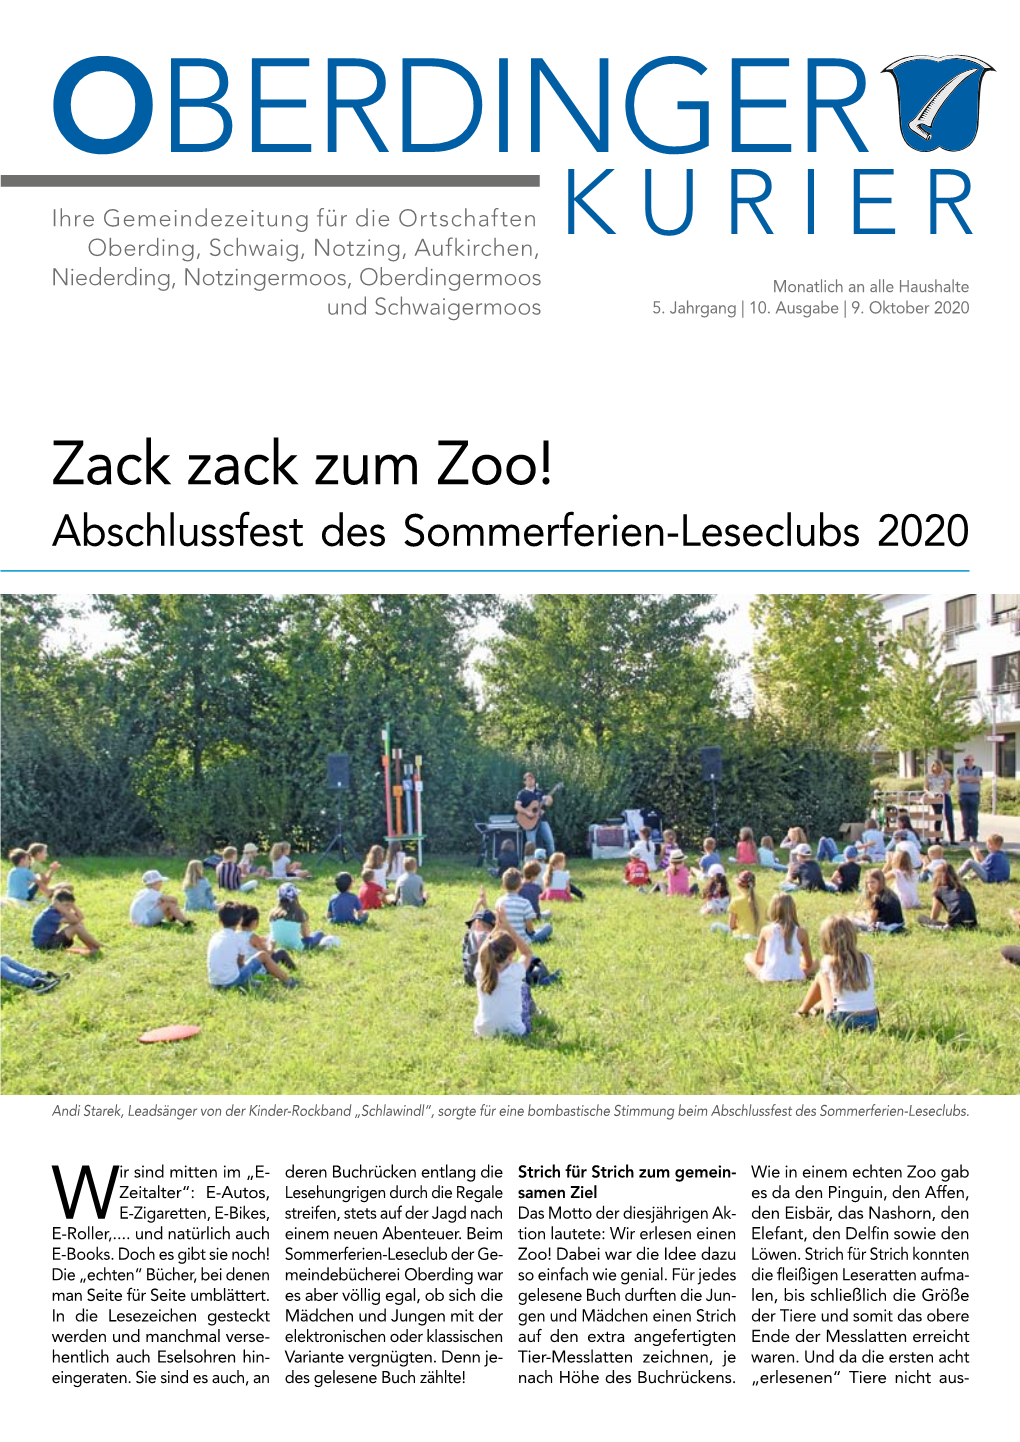 Oberdinger Kurier 10/2020